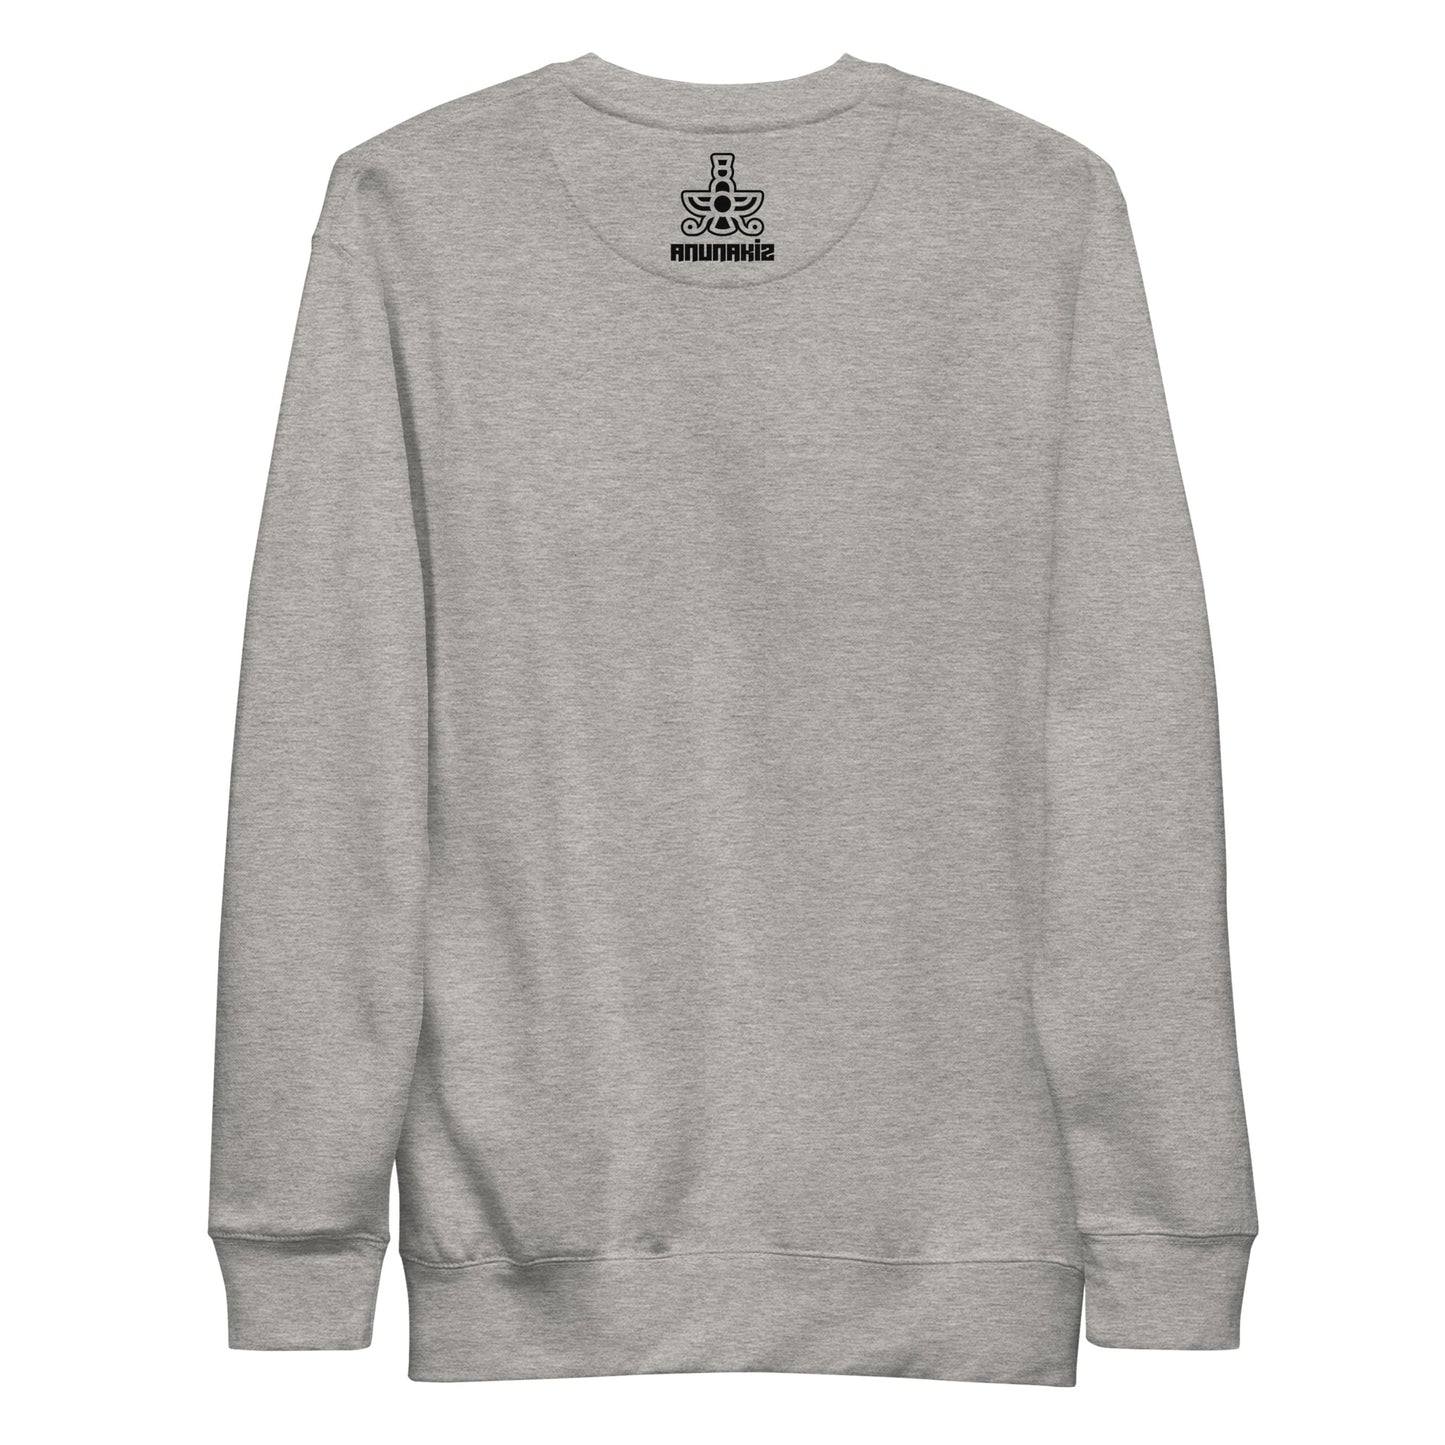 Anunakiz Hammurabi & Anu Unisex Premium Sweatshirt